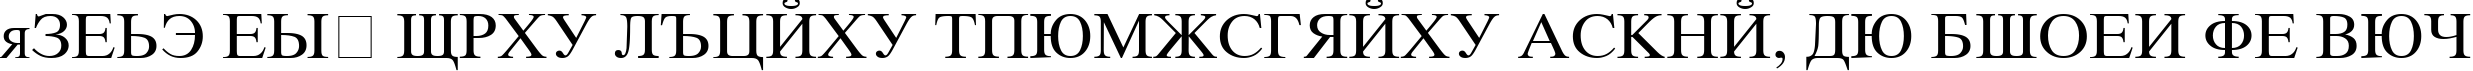 Пример написания шрифтом KOI8 Times текста на русском